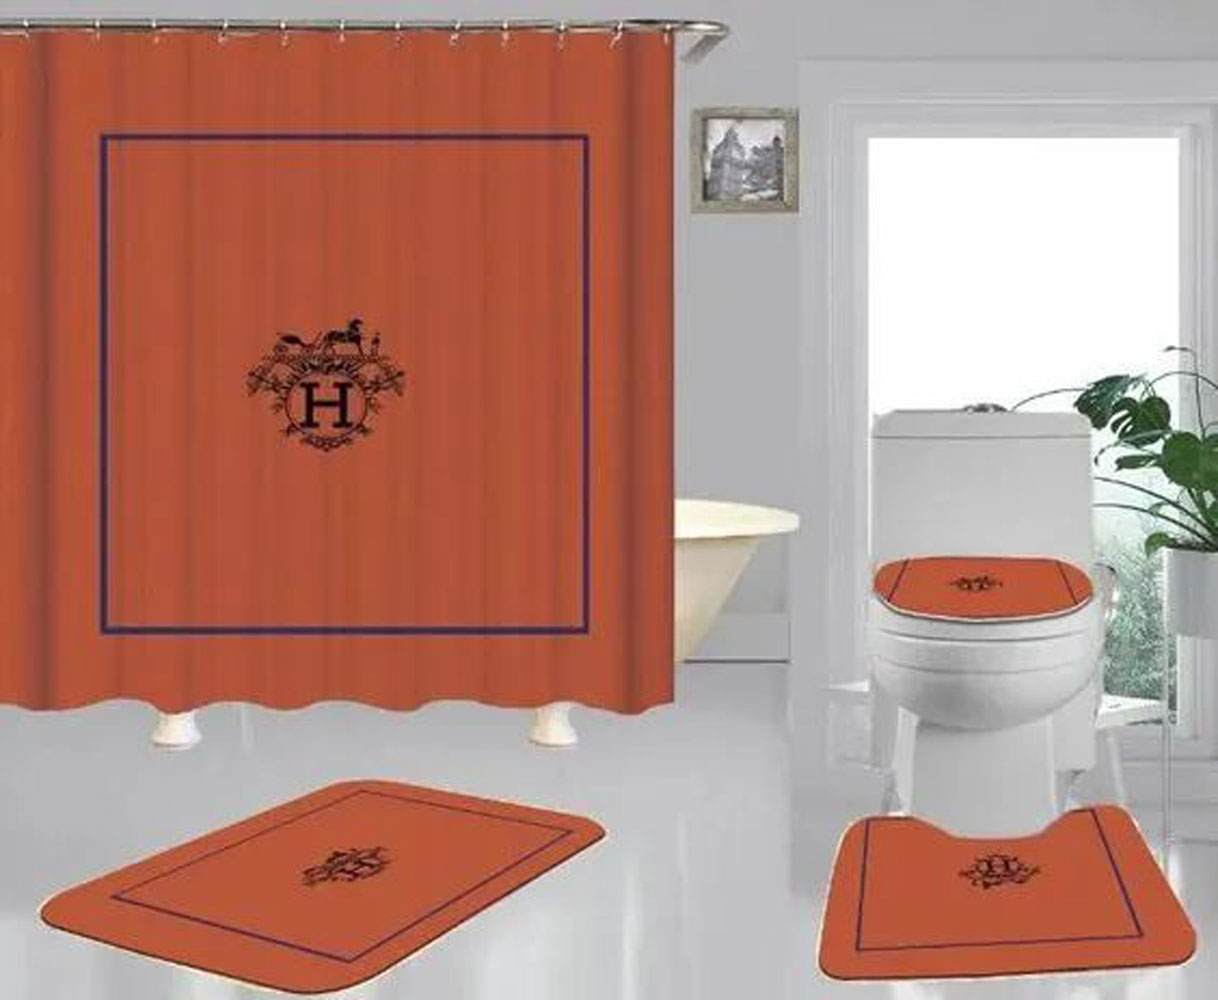 Hermes Paris Orange Bathroom Set Home Decor Hypebeast Bath Mat Luxury Fashion Brand